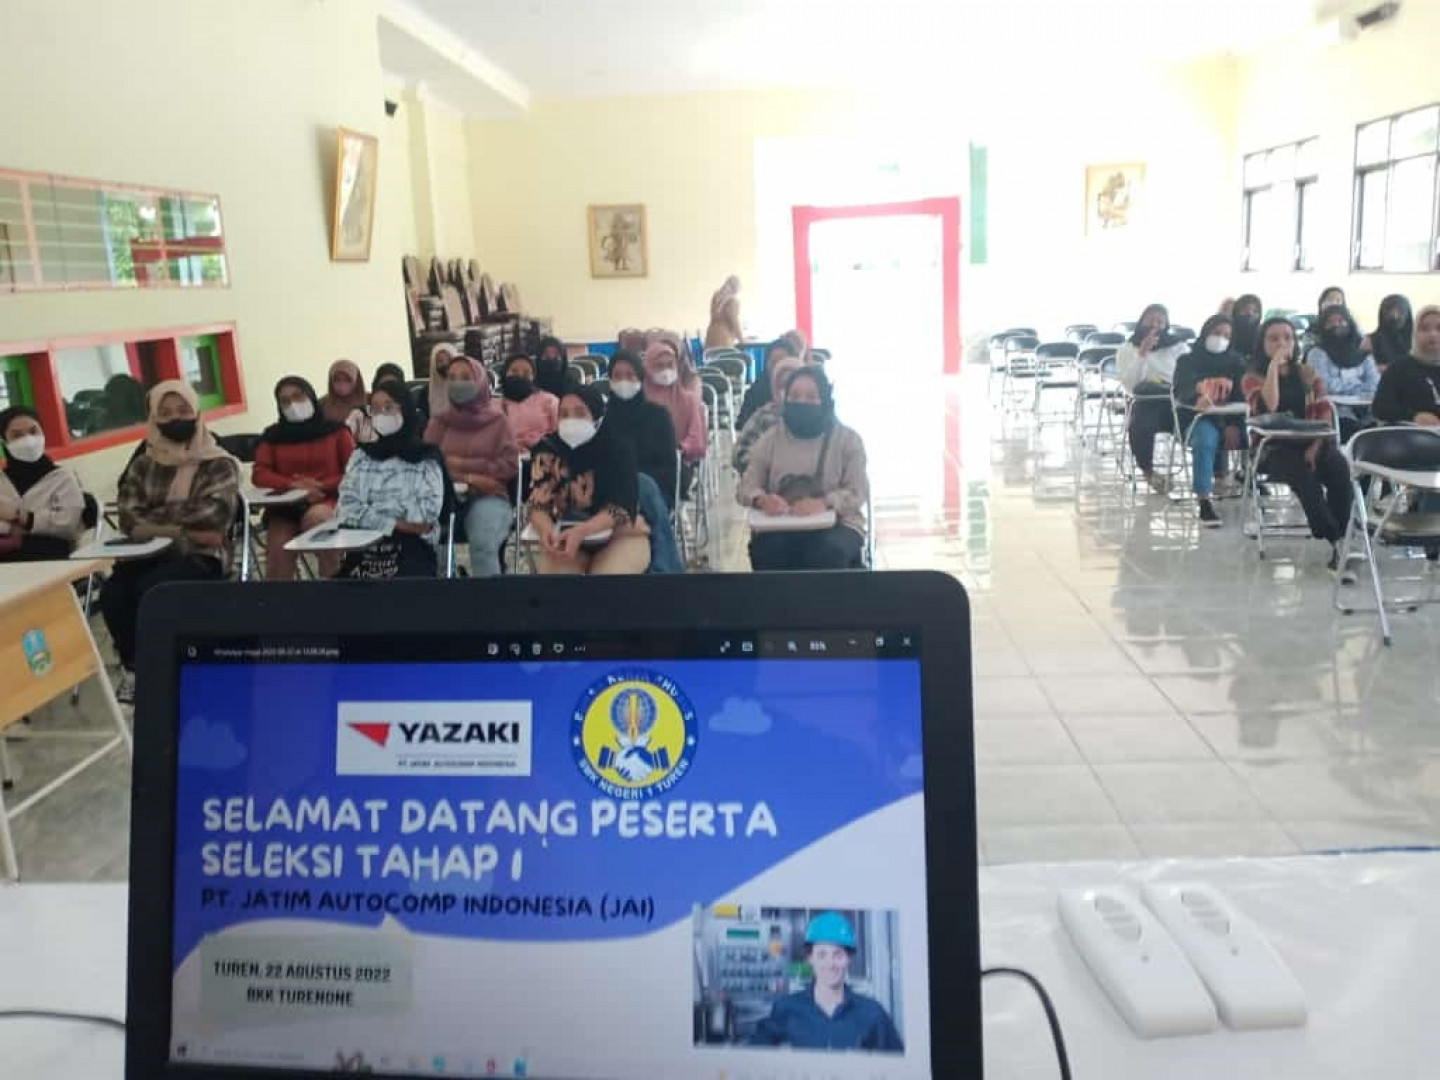 BKK SMK Negeri 1 Turen melaksanakan recruitment bekerja sama dengan PT. Jatim Autocomp Indonesia